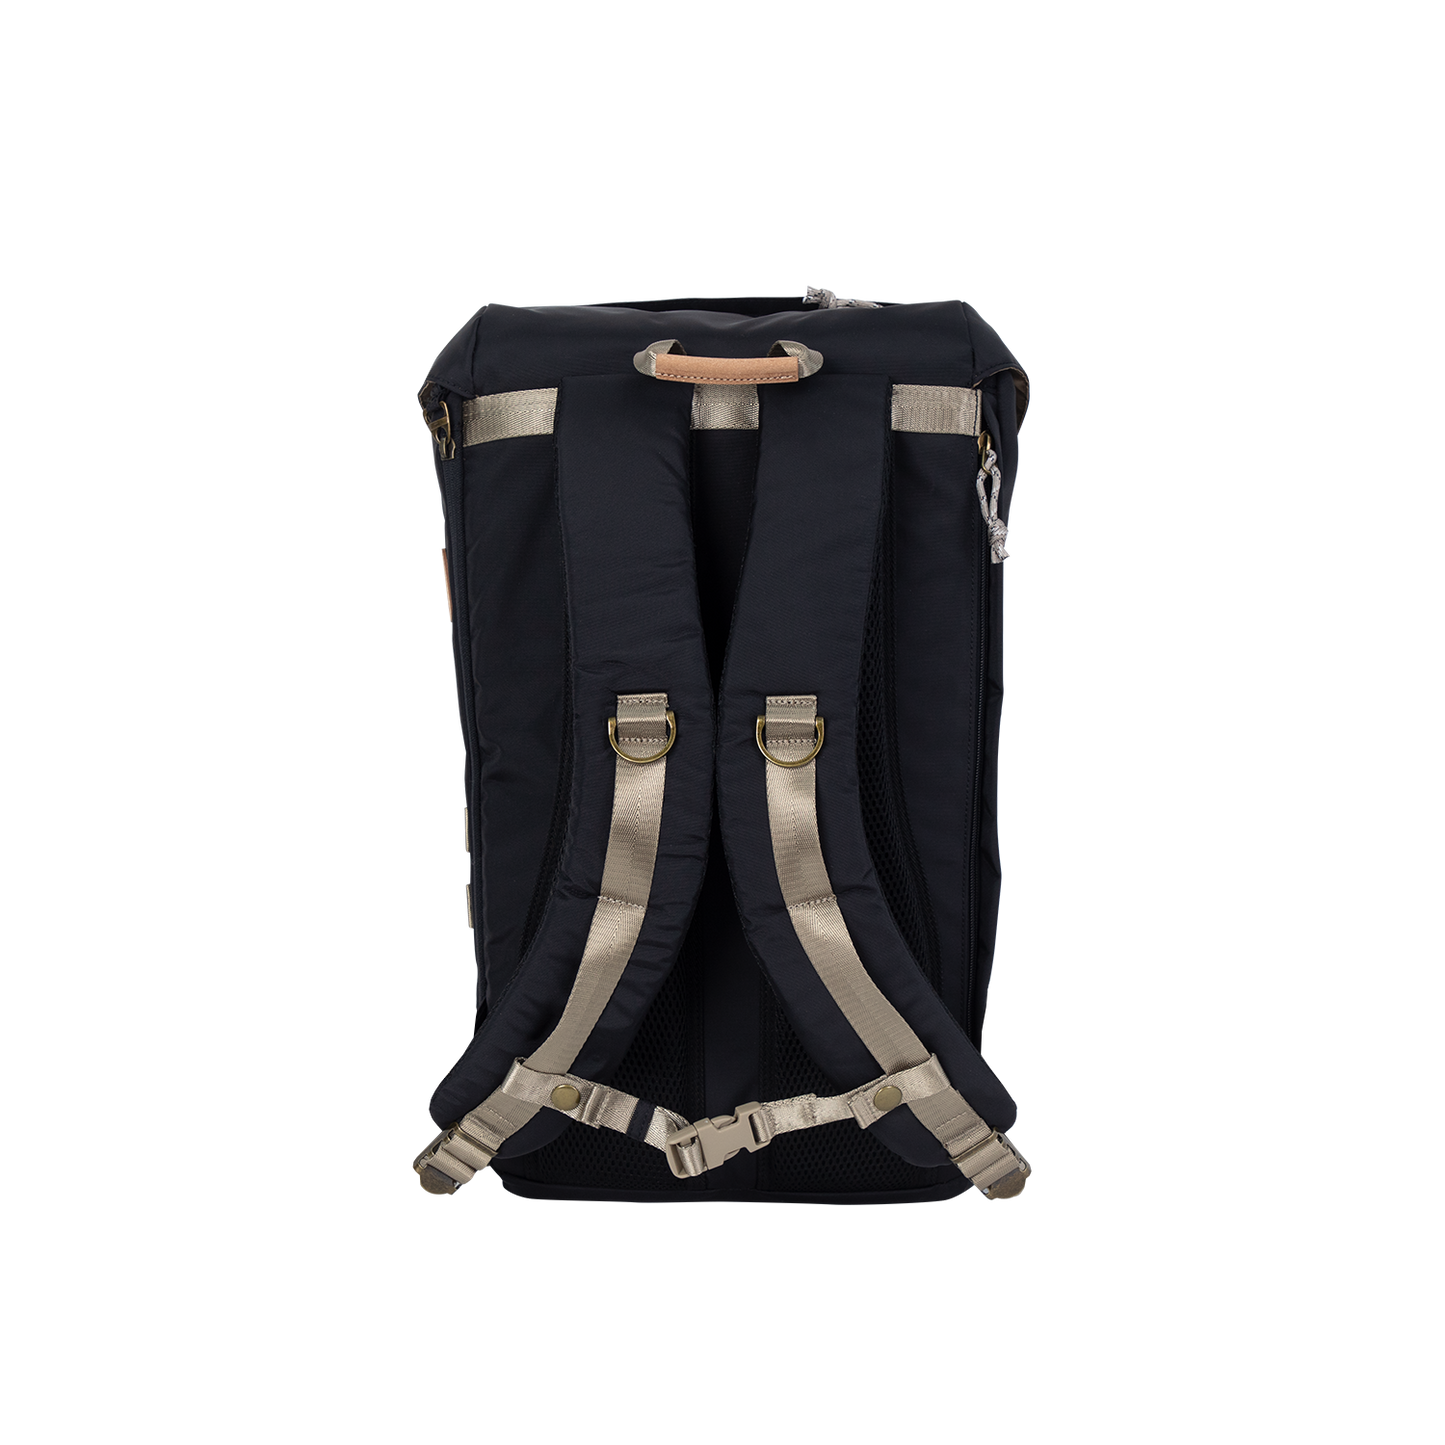 Colorado Jungle II Series Backpack